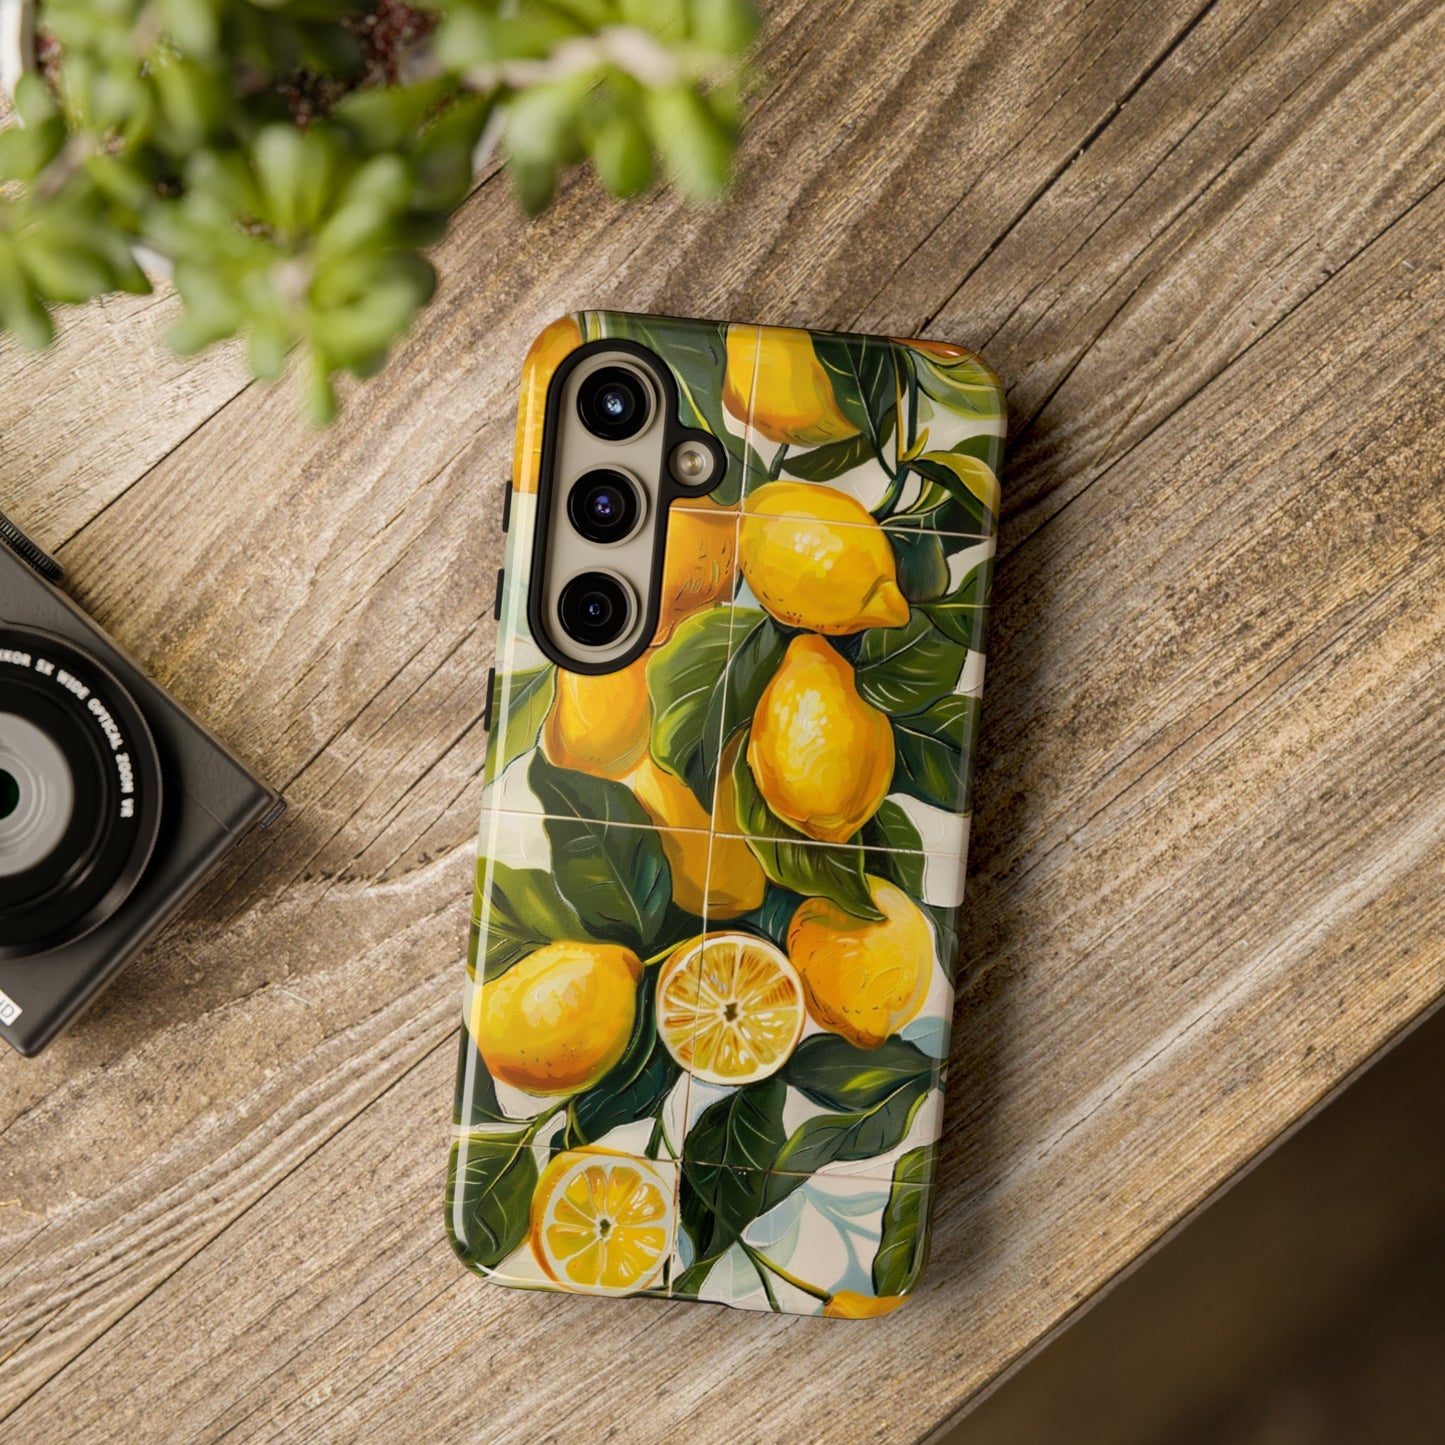 Best iPhone cases with Mediterranean tile design